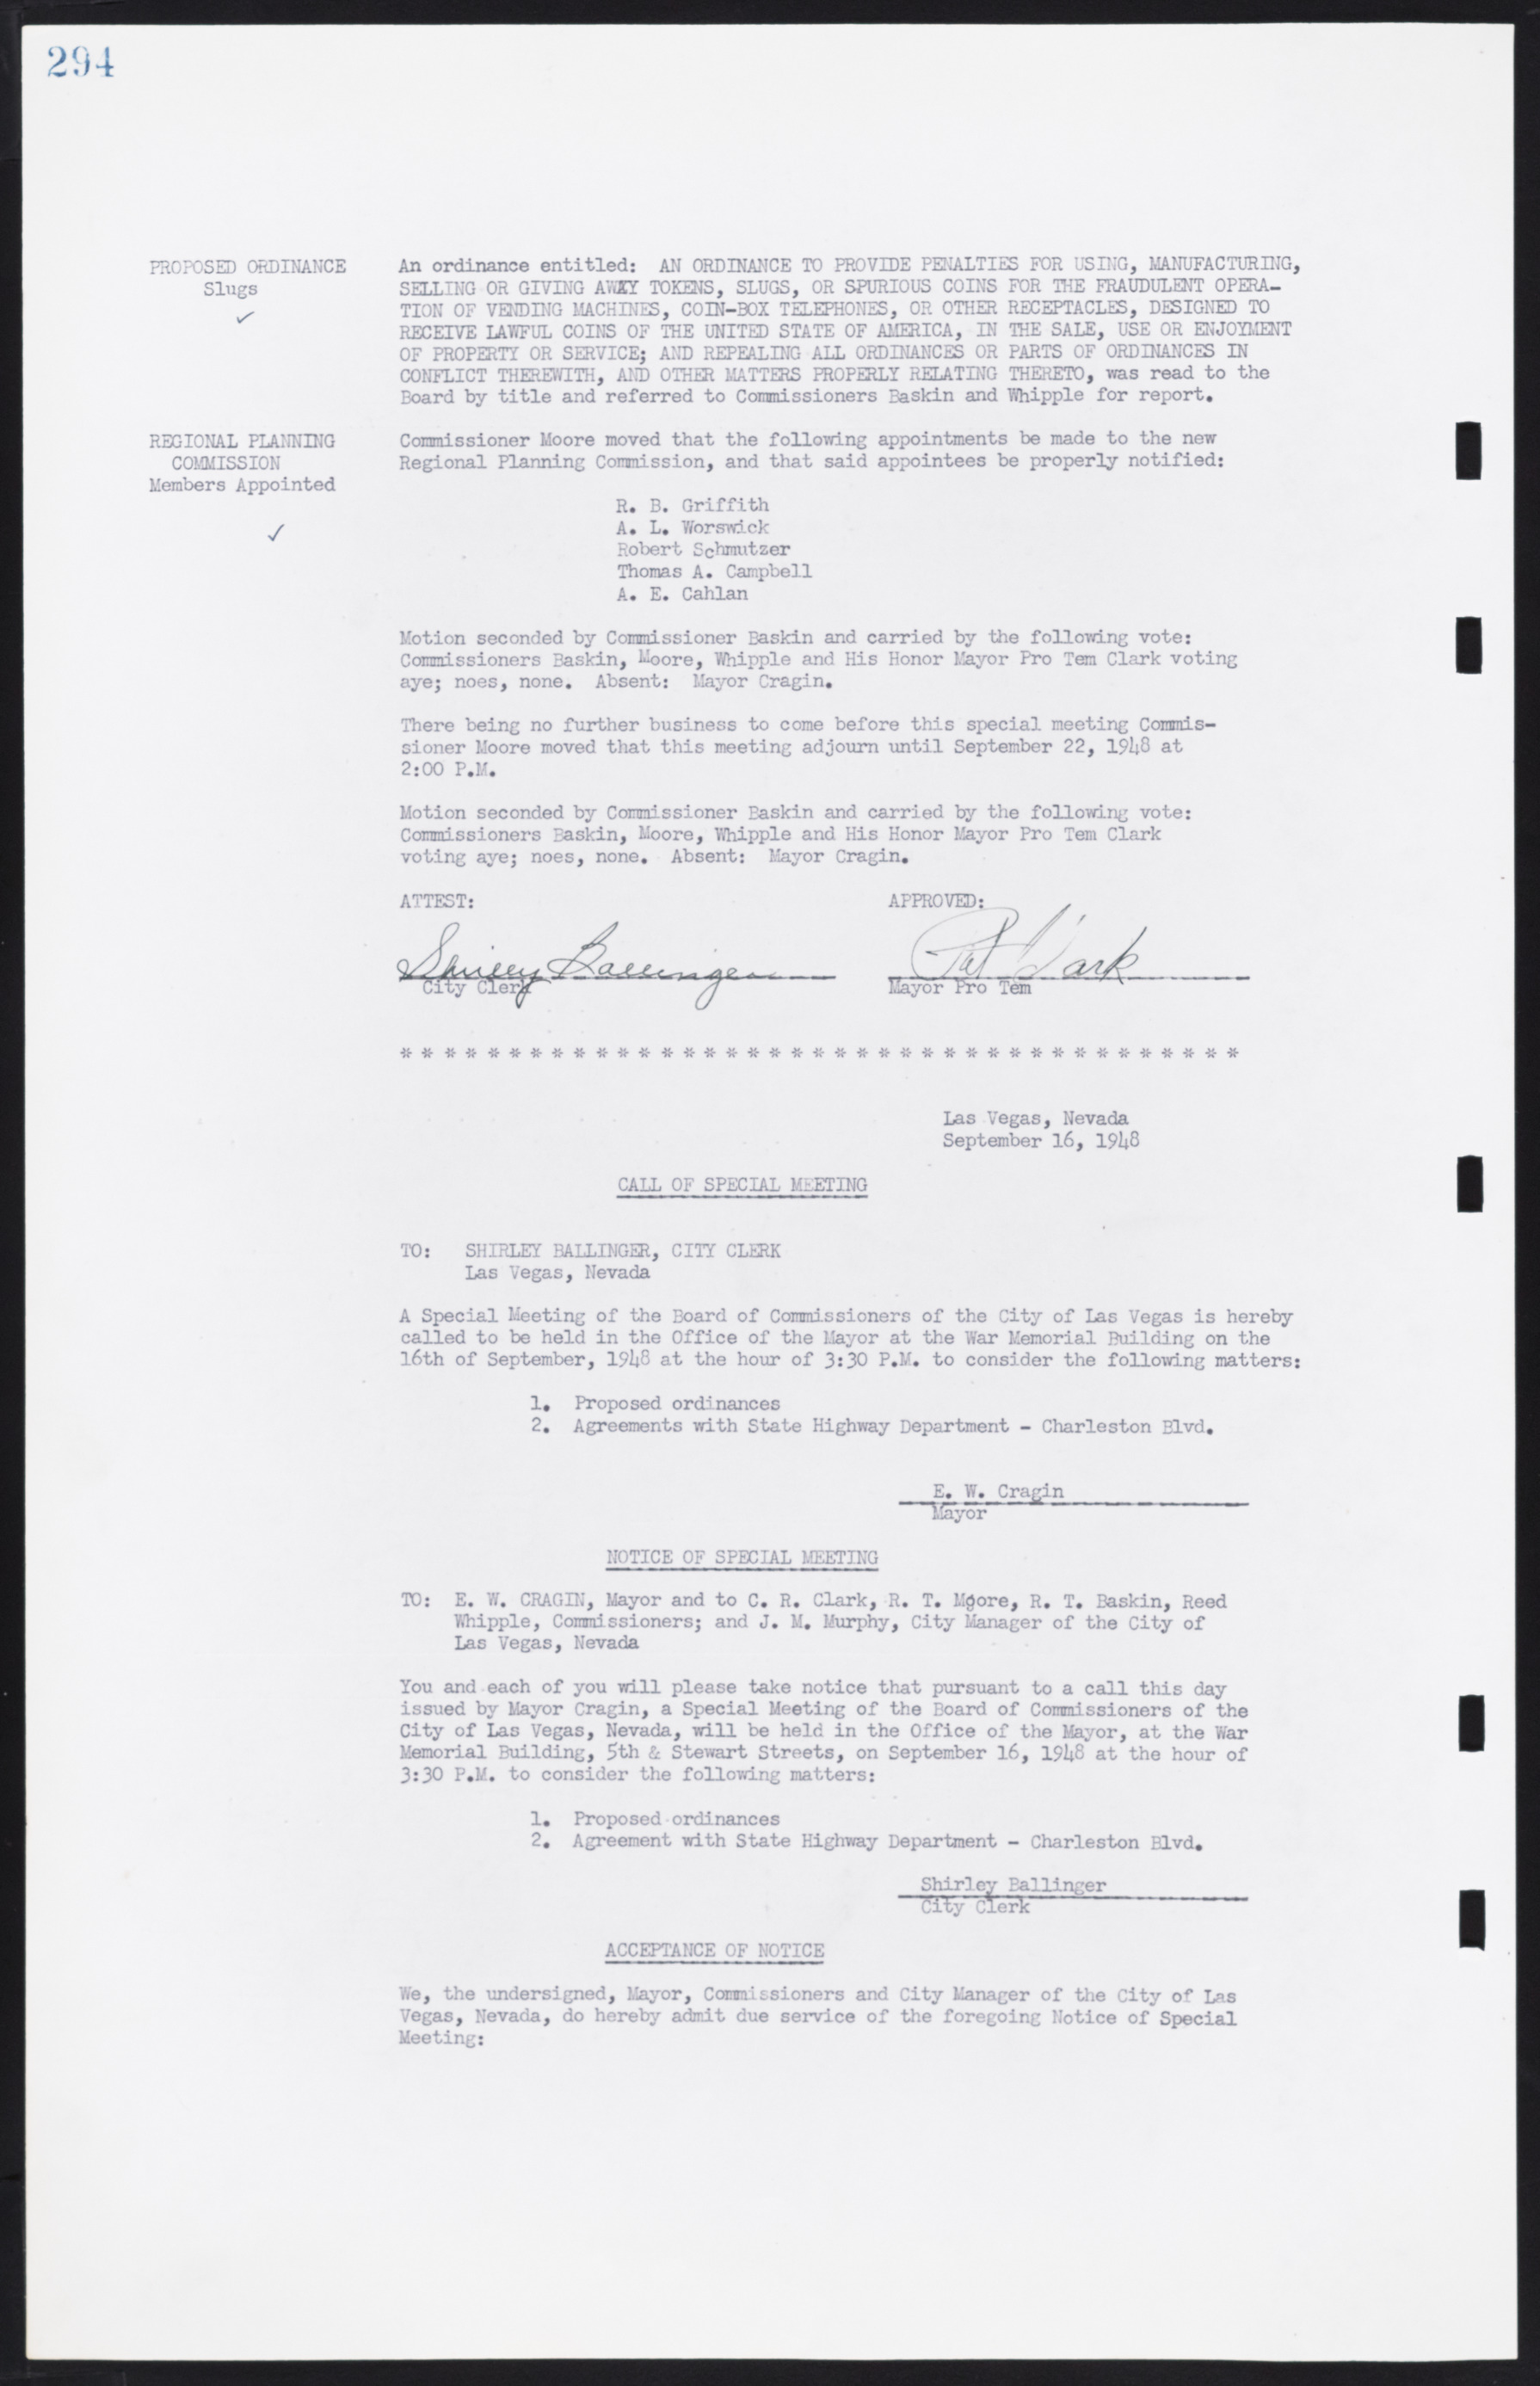 Las Vegas City Commission Minutes, January 7, 1947 to October 26, 1949, lvc000006-318